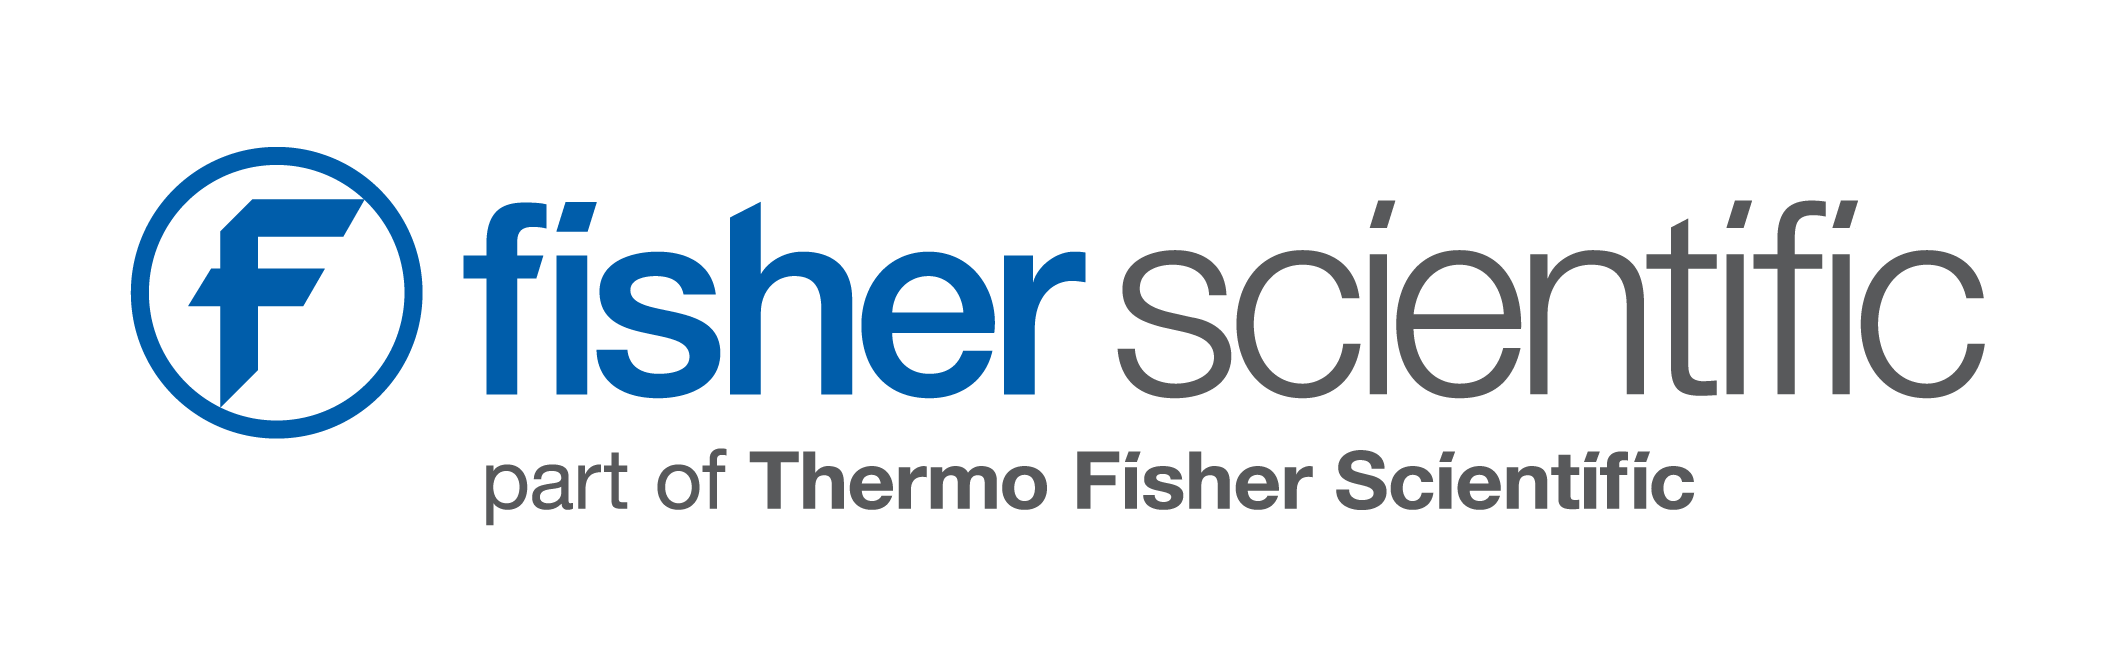 Fisher-Scientiifc-Logo.png